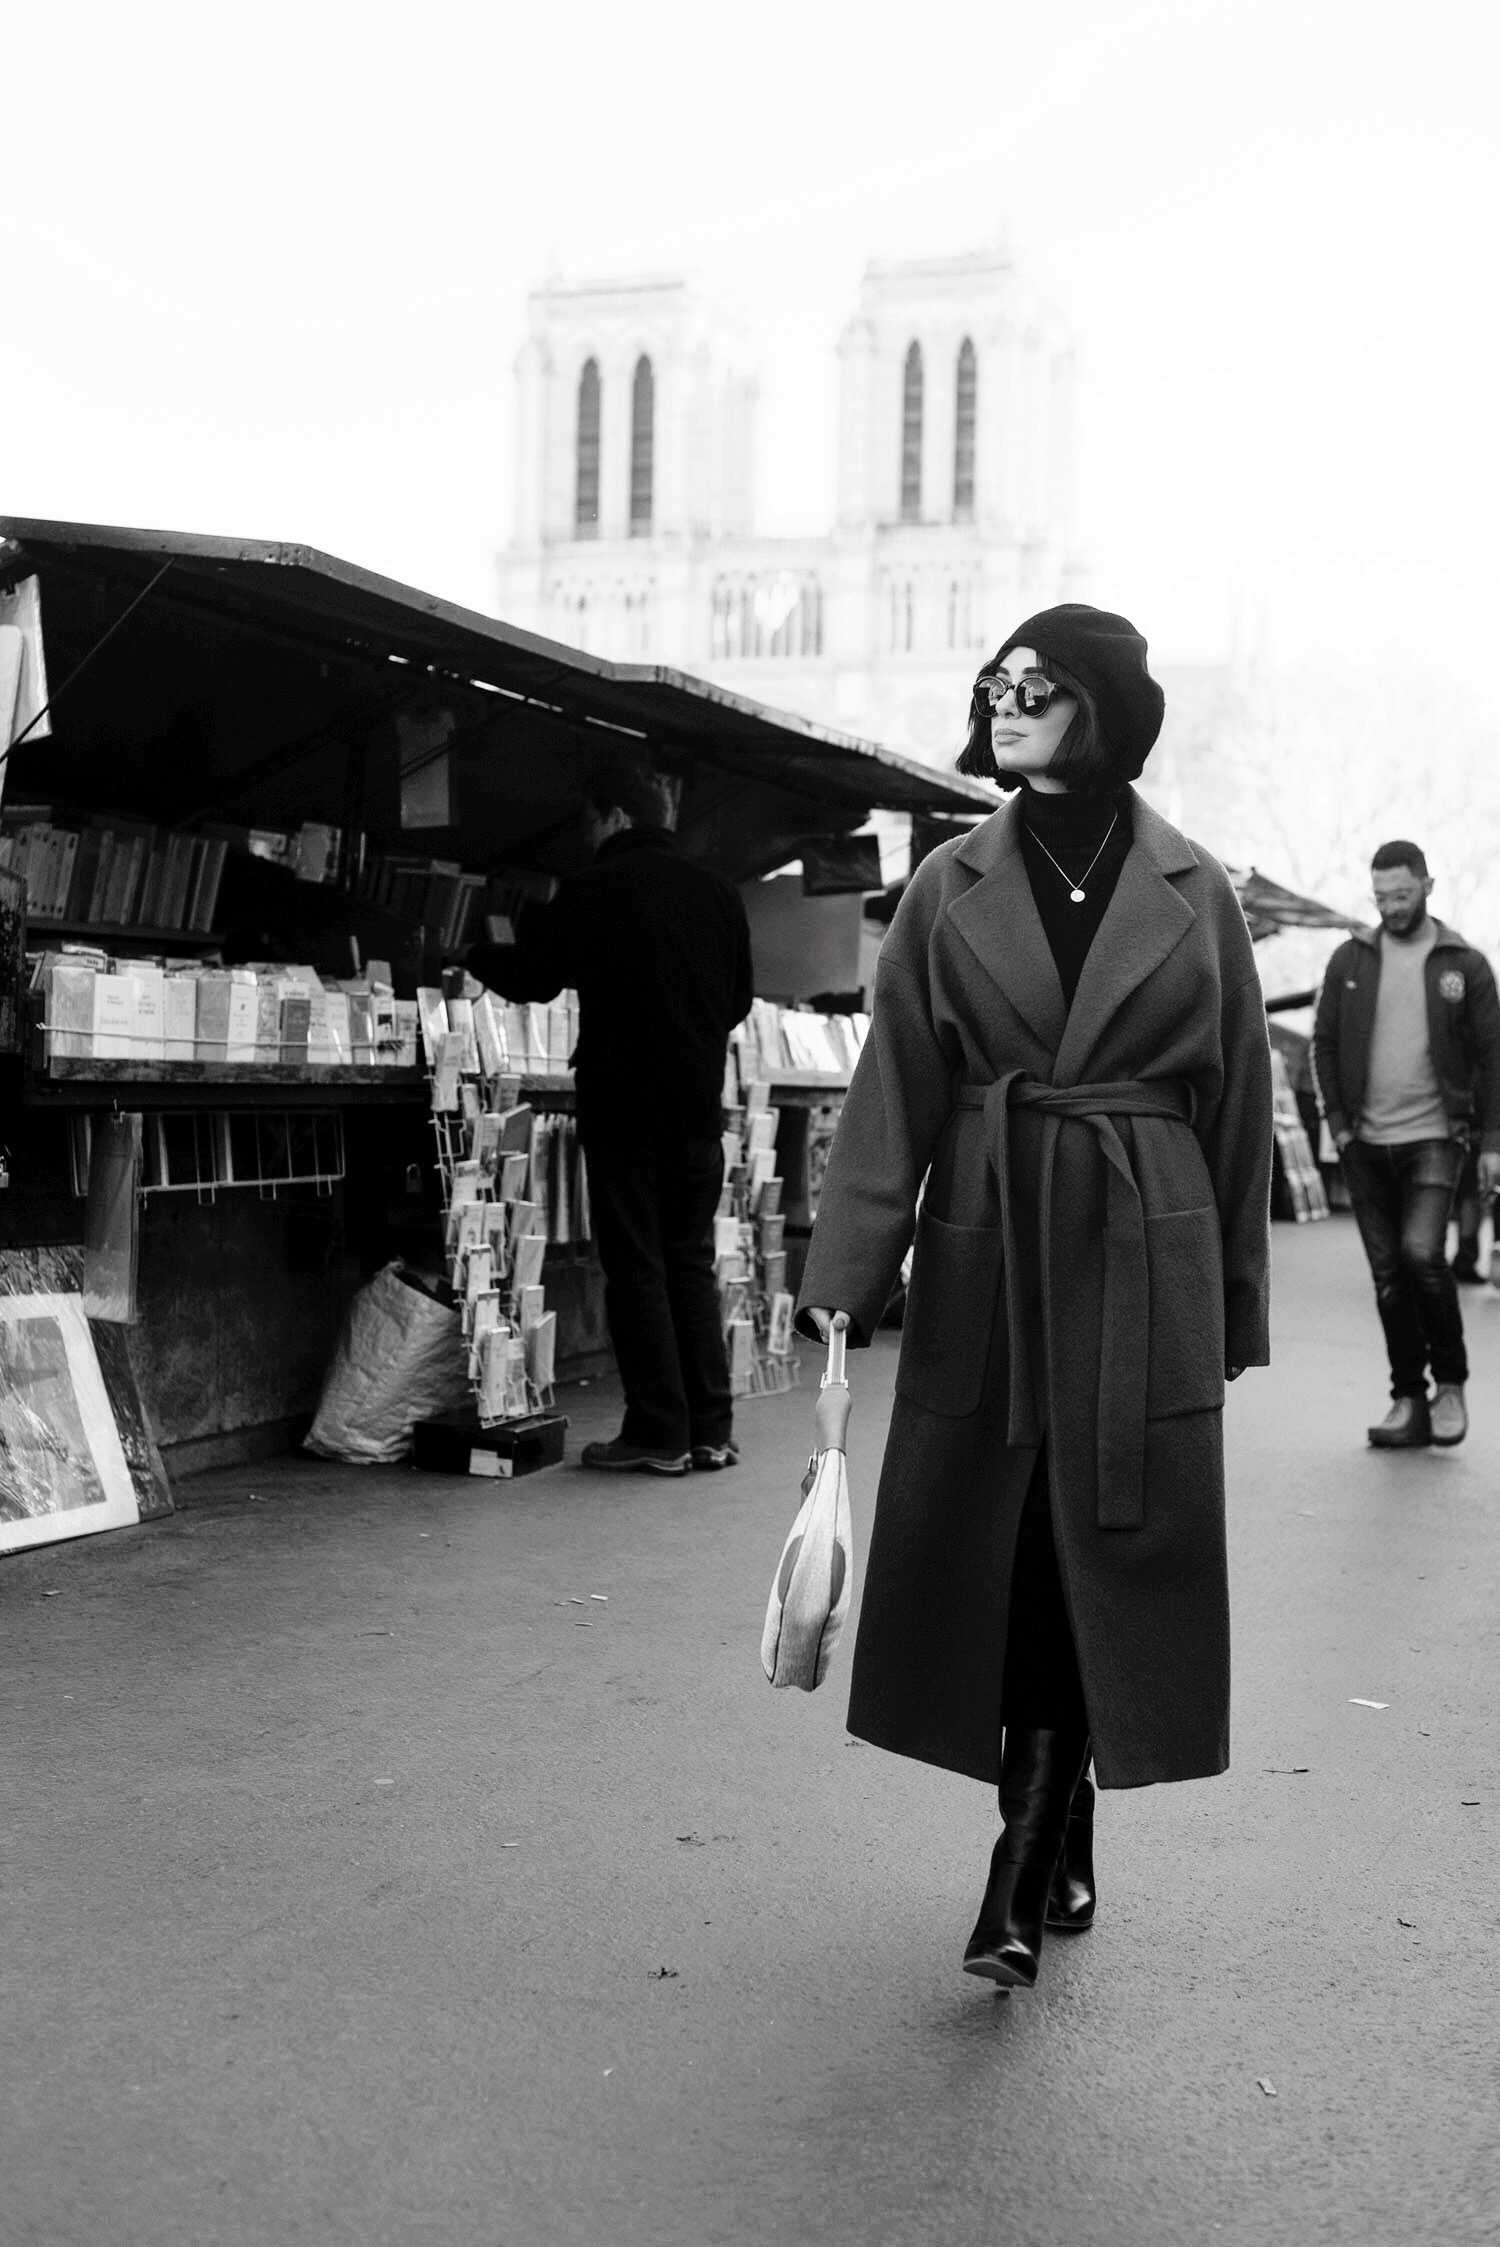 Top Canadian fashion blogger Cee Fardoe of Coco & Vera walks along the quais in Paris, wearing a Zara wrap coat and carrying a Dior handbag